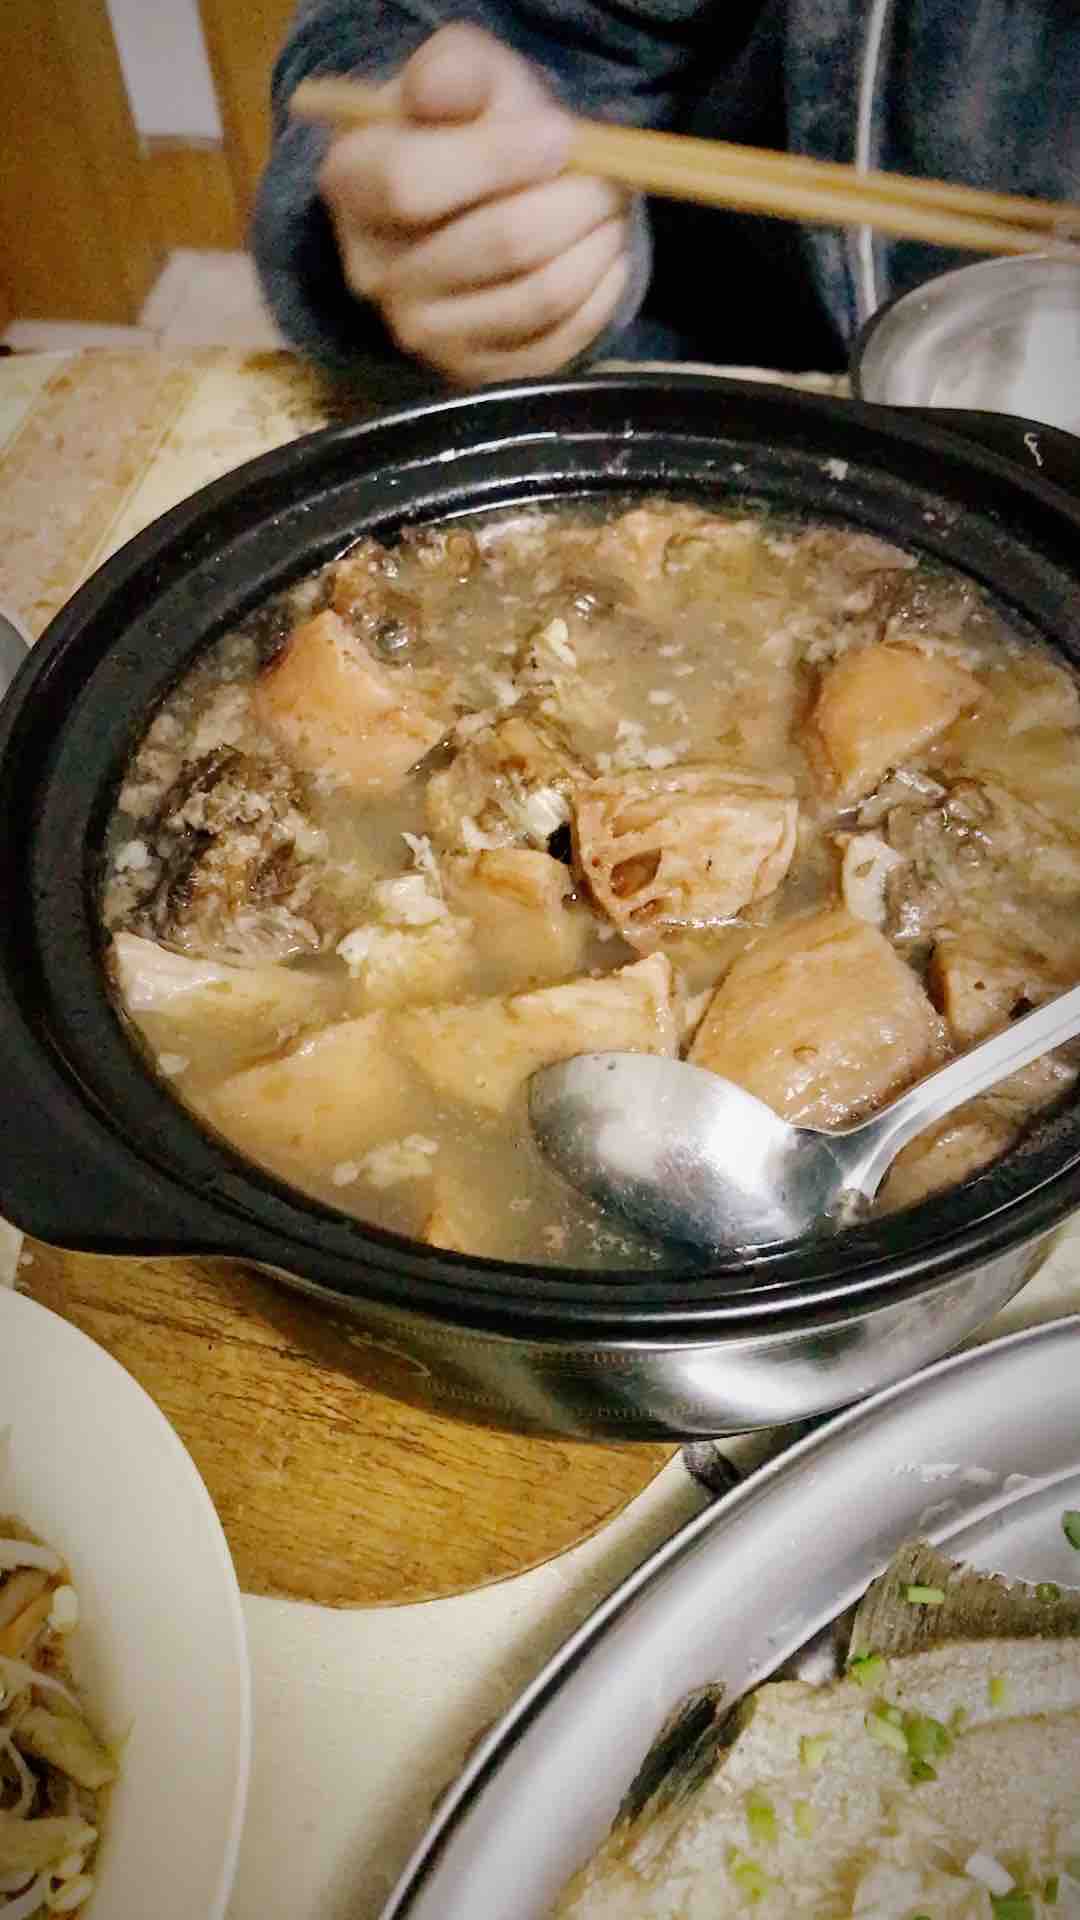 Lotus Root Pork Ribs Soup recipe